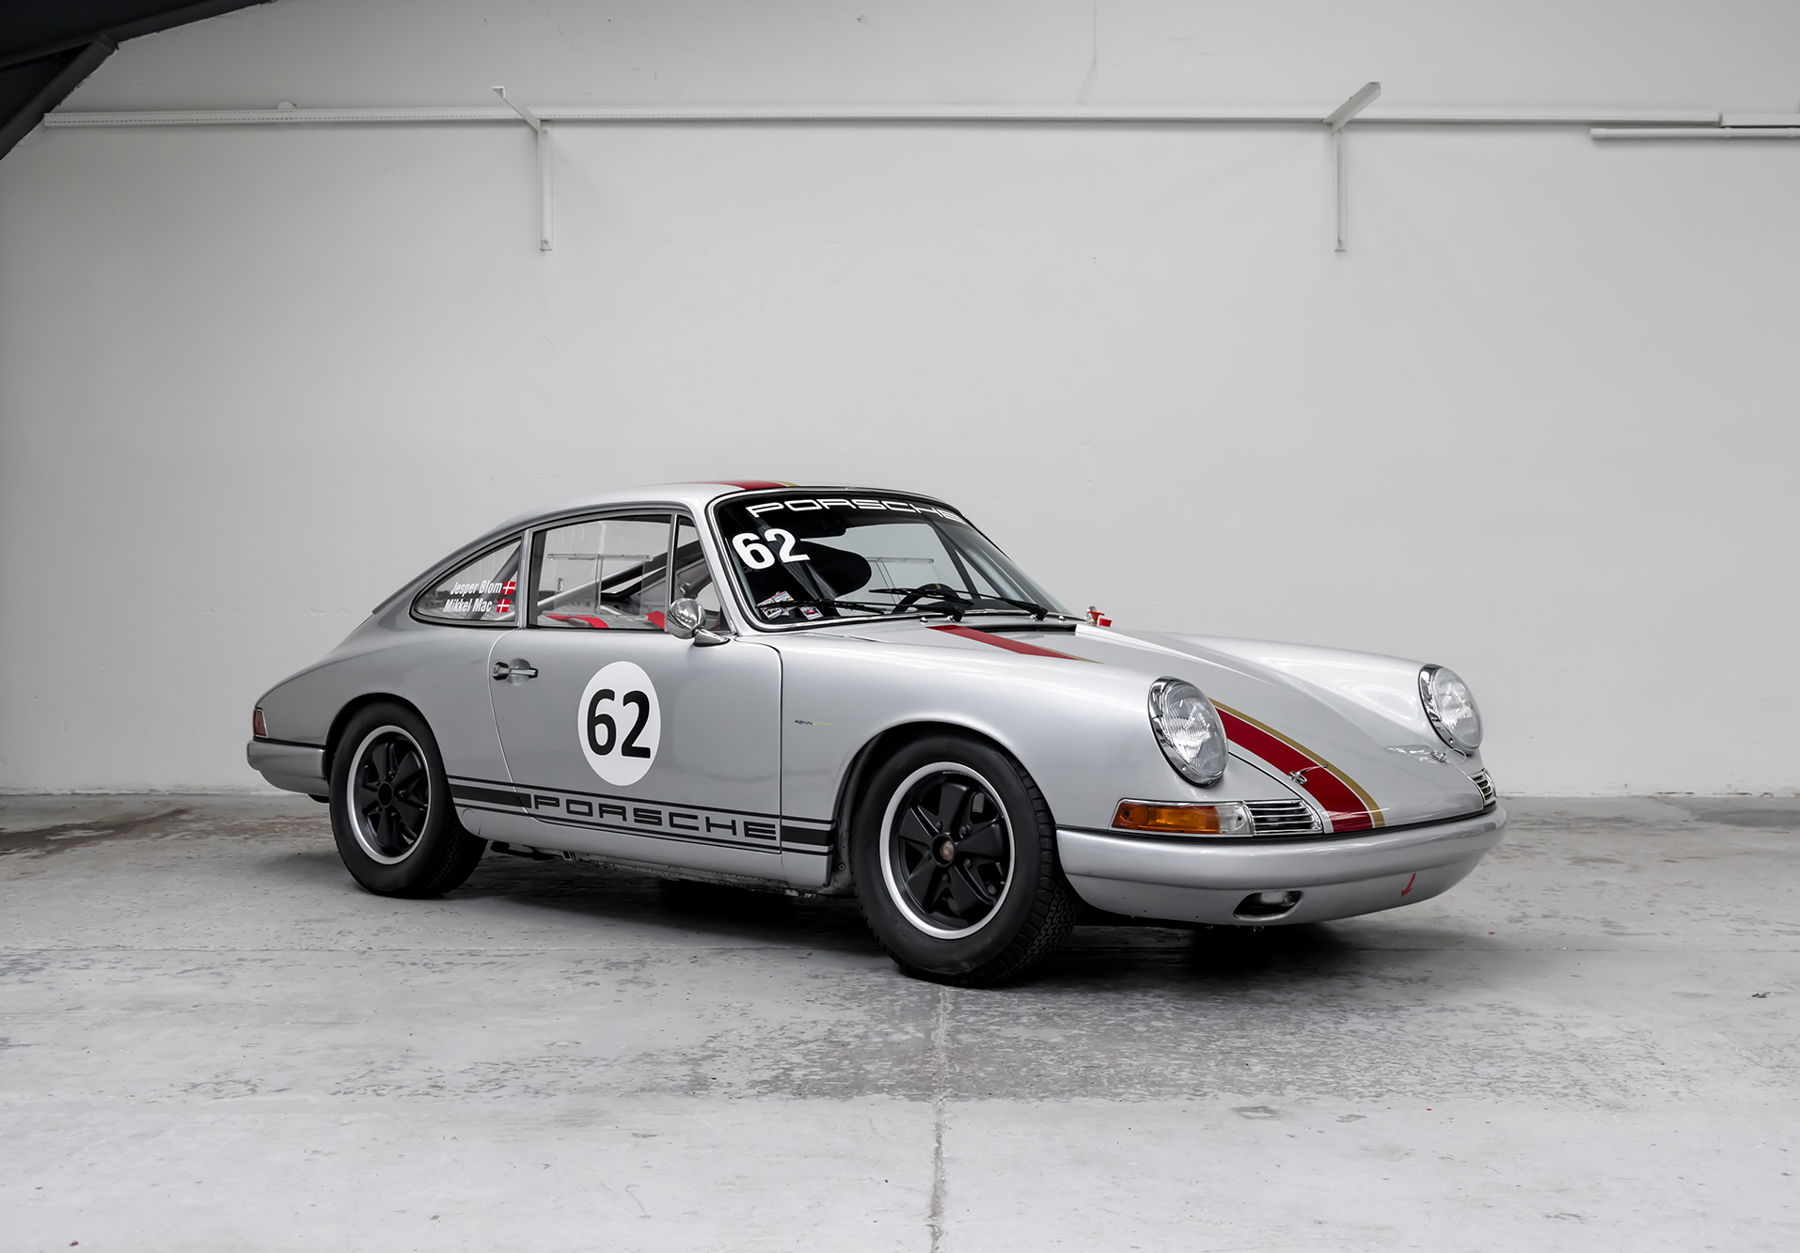 1965 Porsche for sale - Elferspot - Marketplace for Porsche